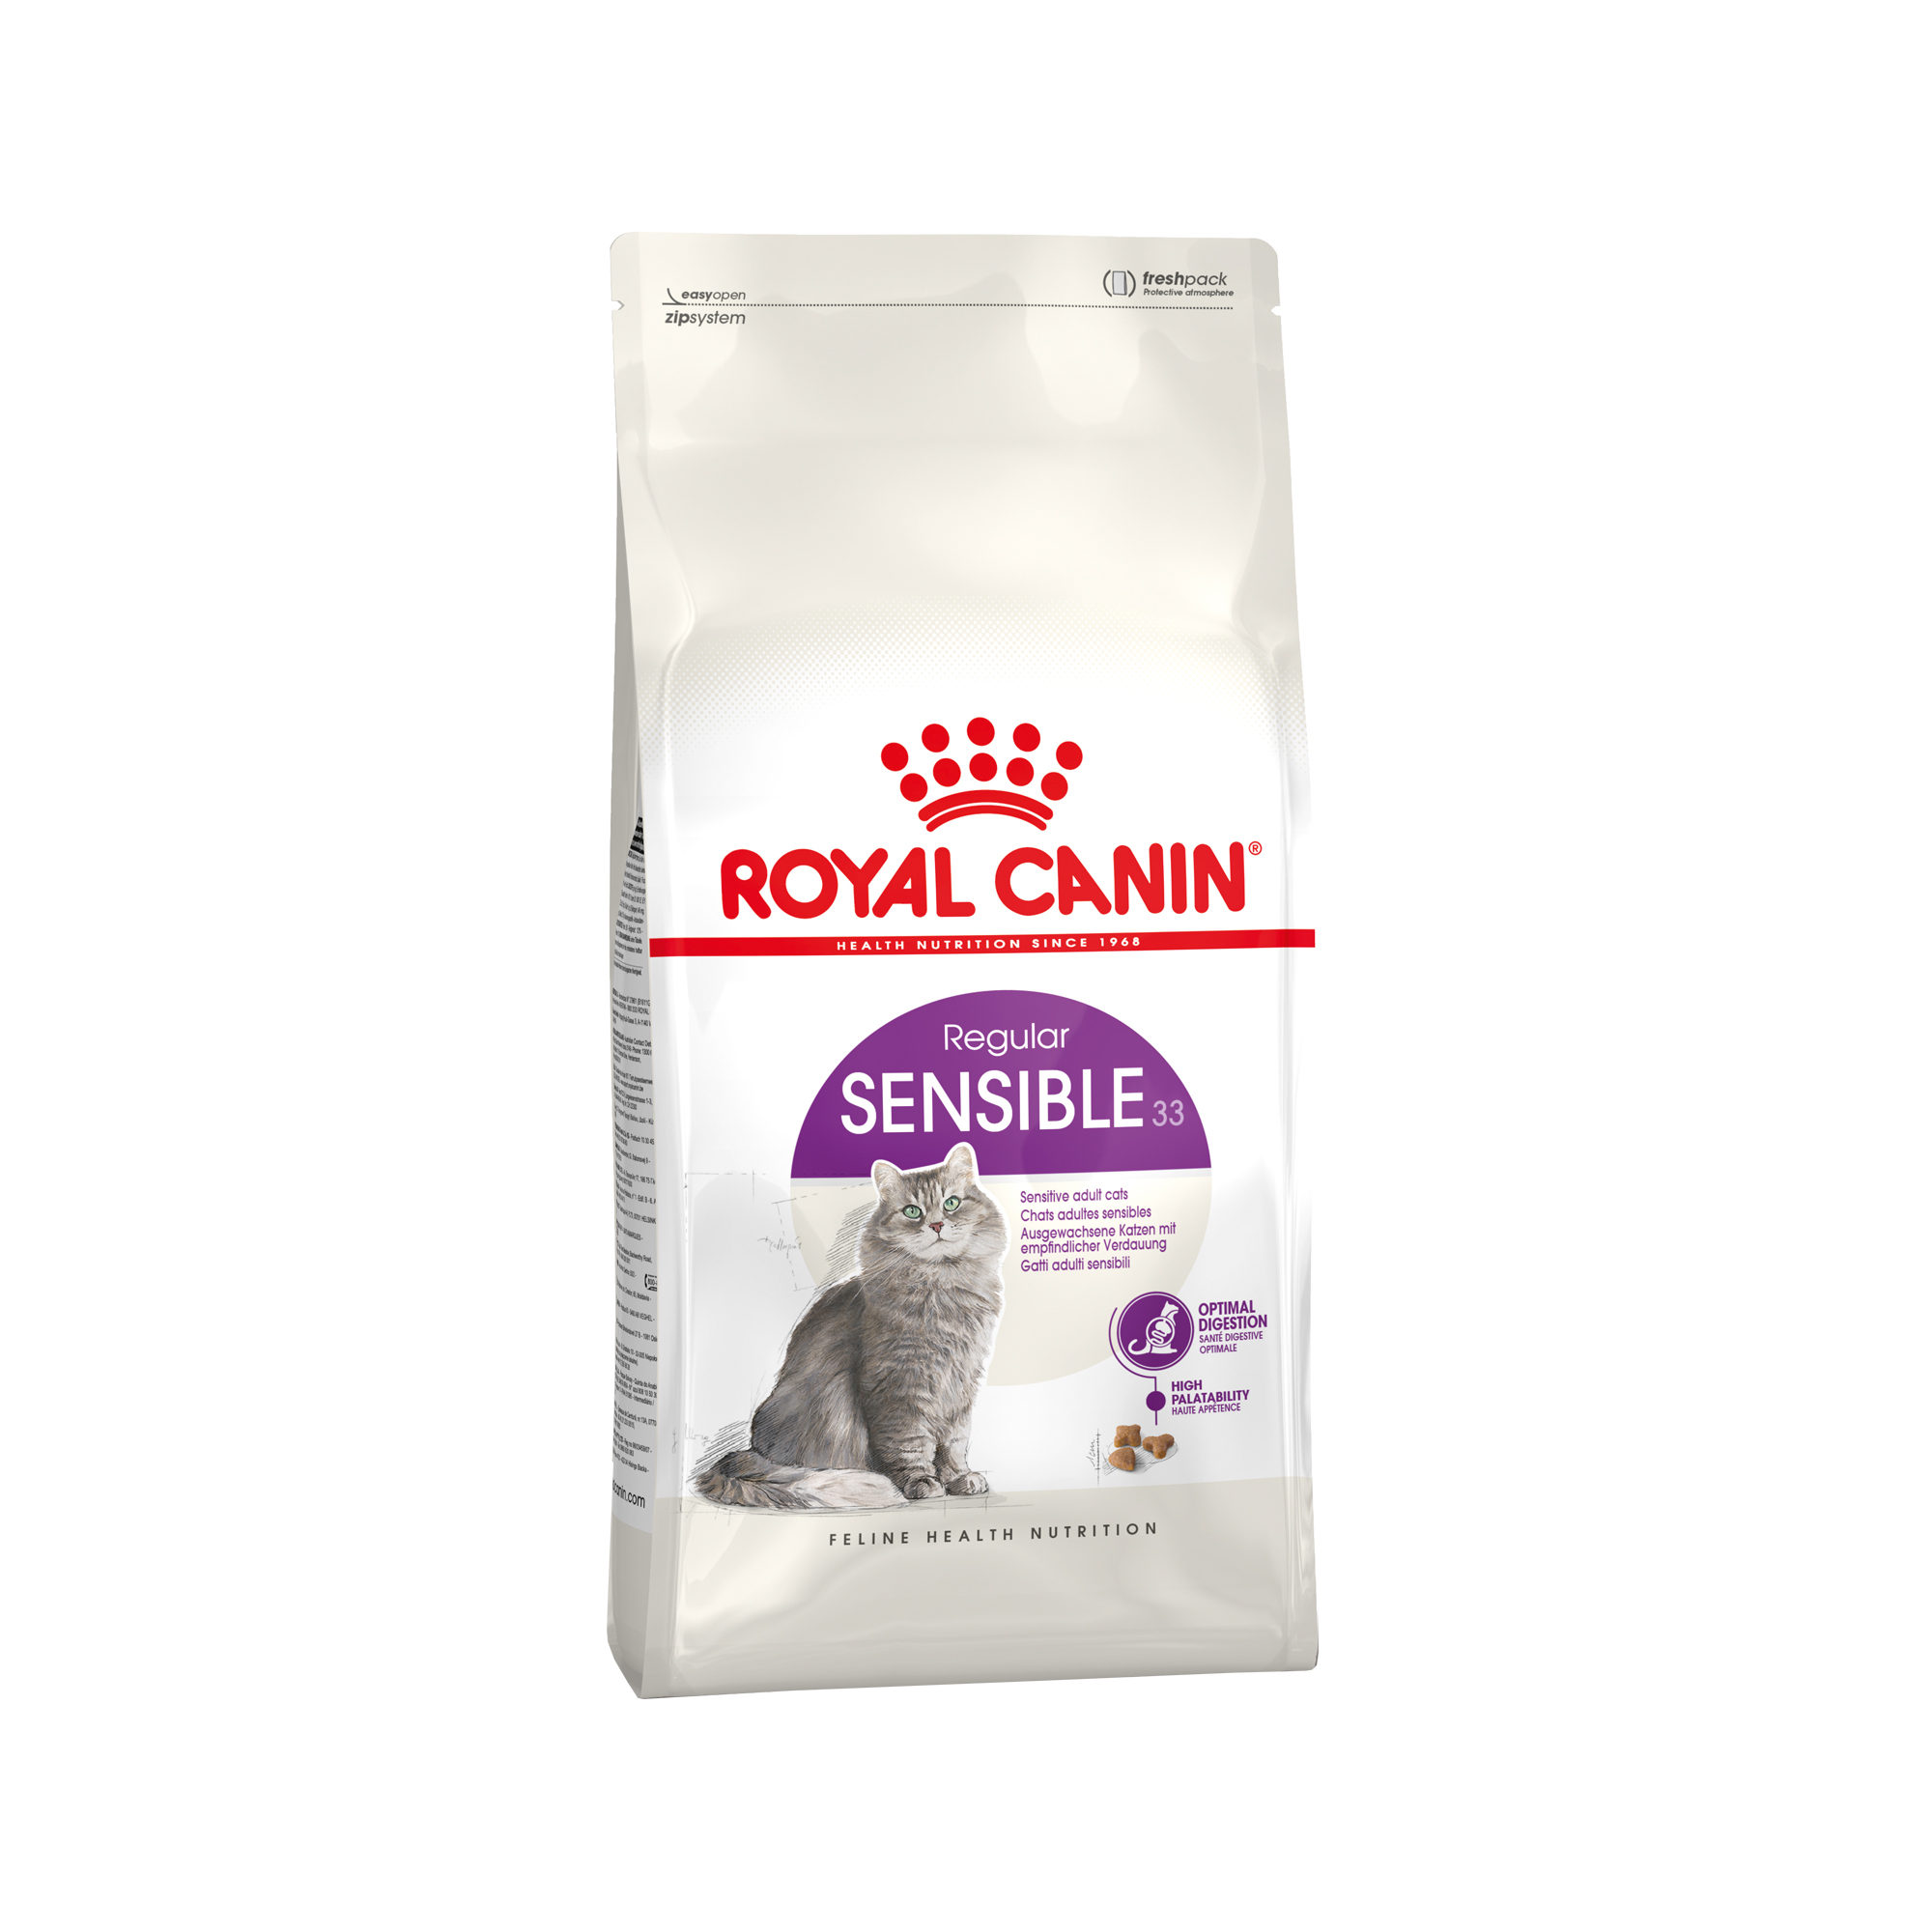 Royal Canin Sensible 33 Katzenfutter - 2 kg